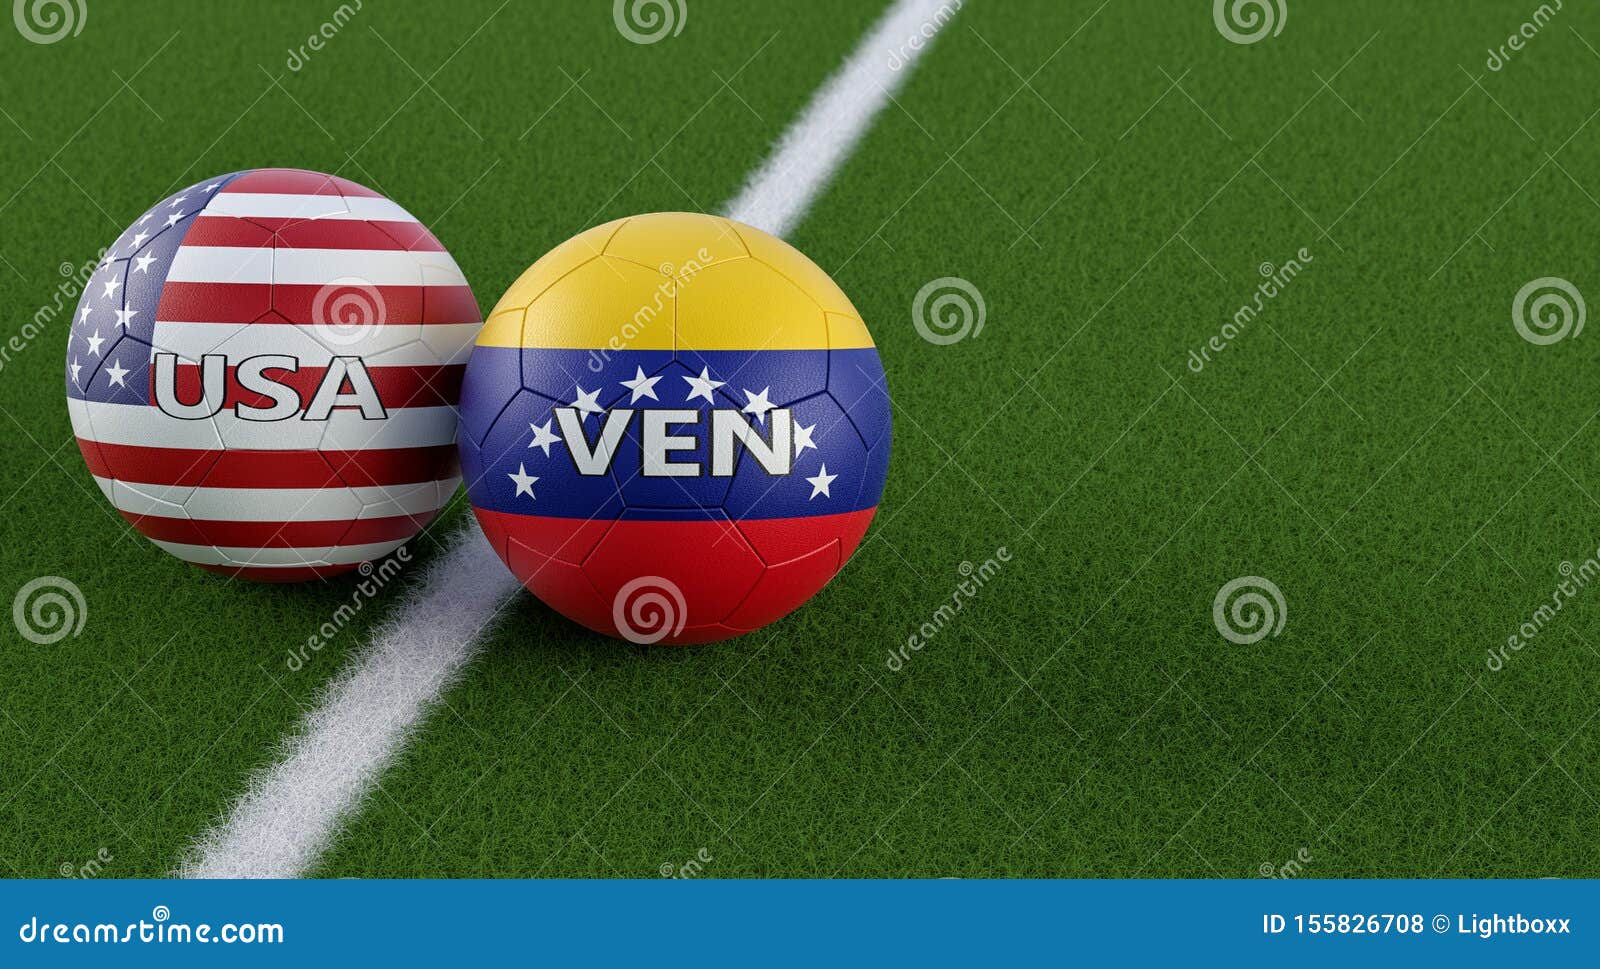 USA Vs. Venezuela Soccer Match - Soccer Balls In USA And ...